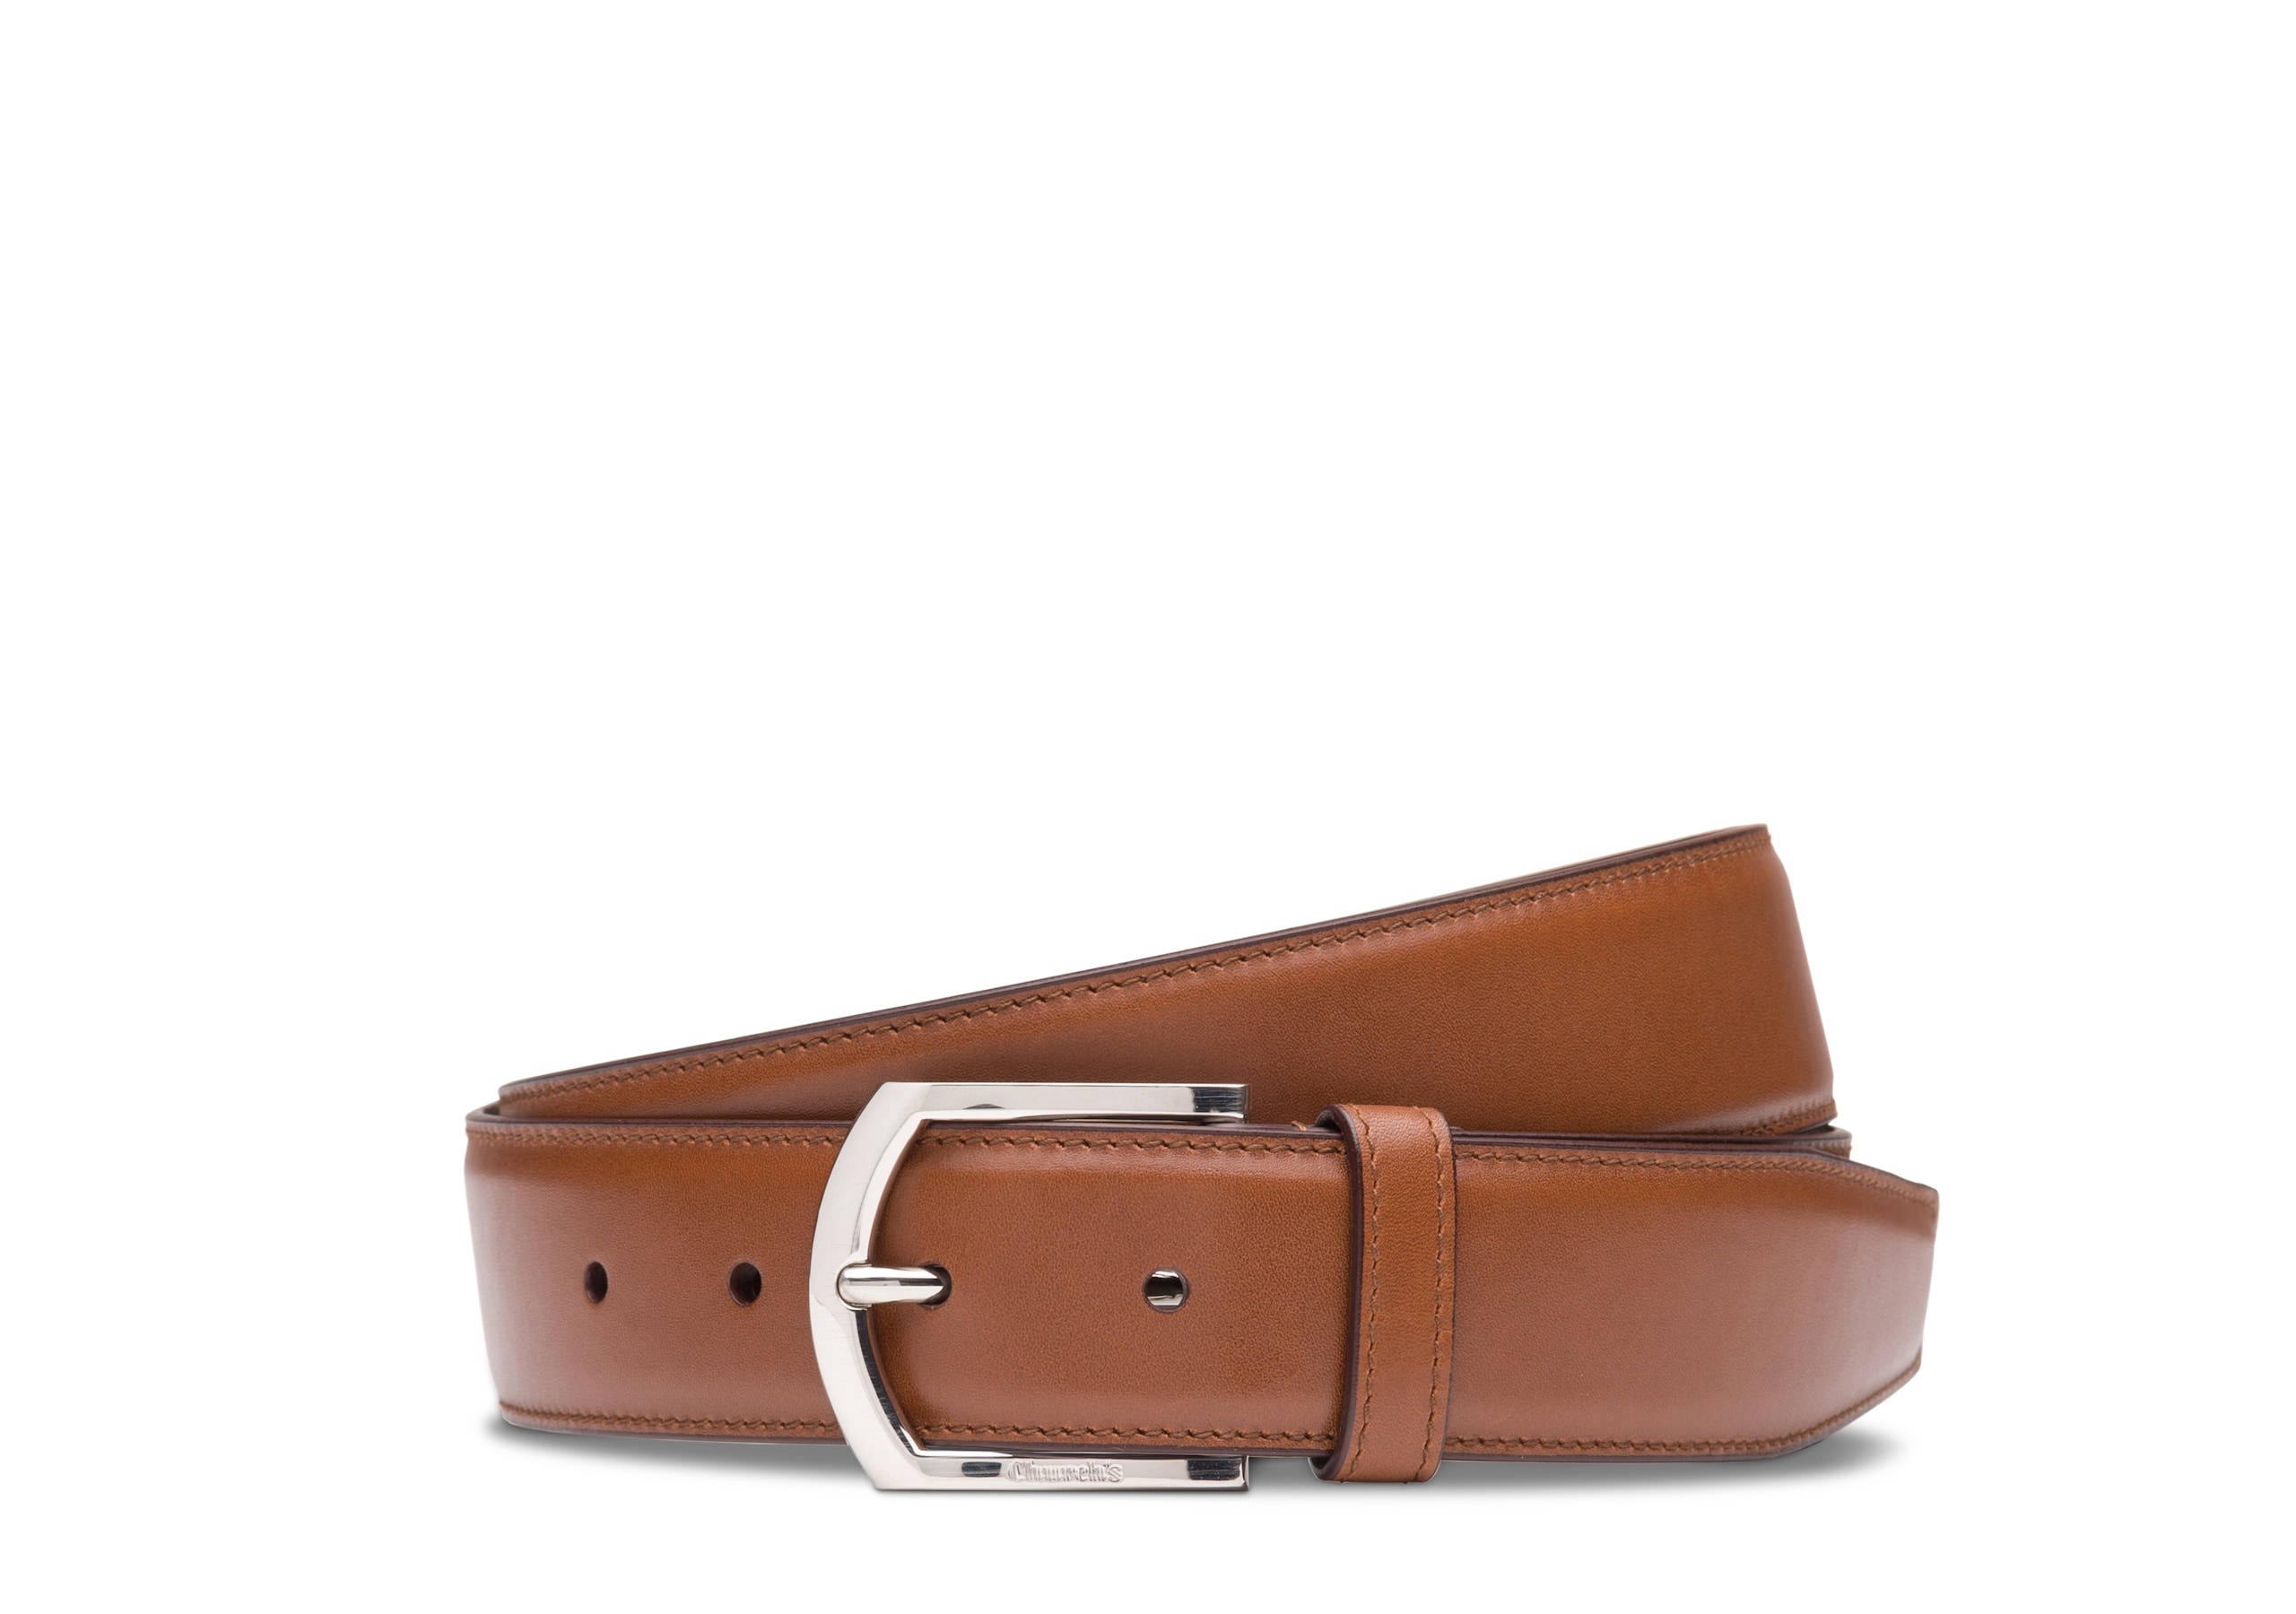 Classic buckle belt
Nevada Leather Walnut - 1